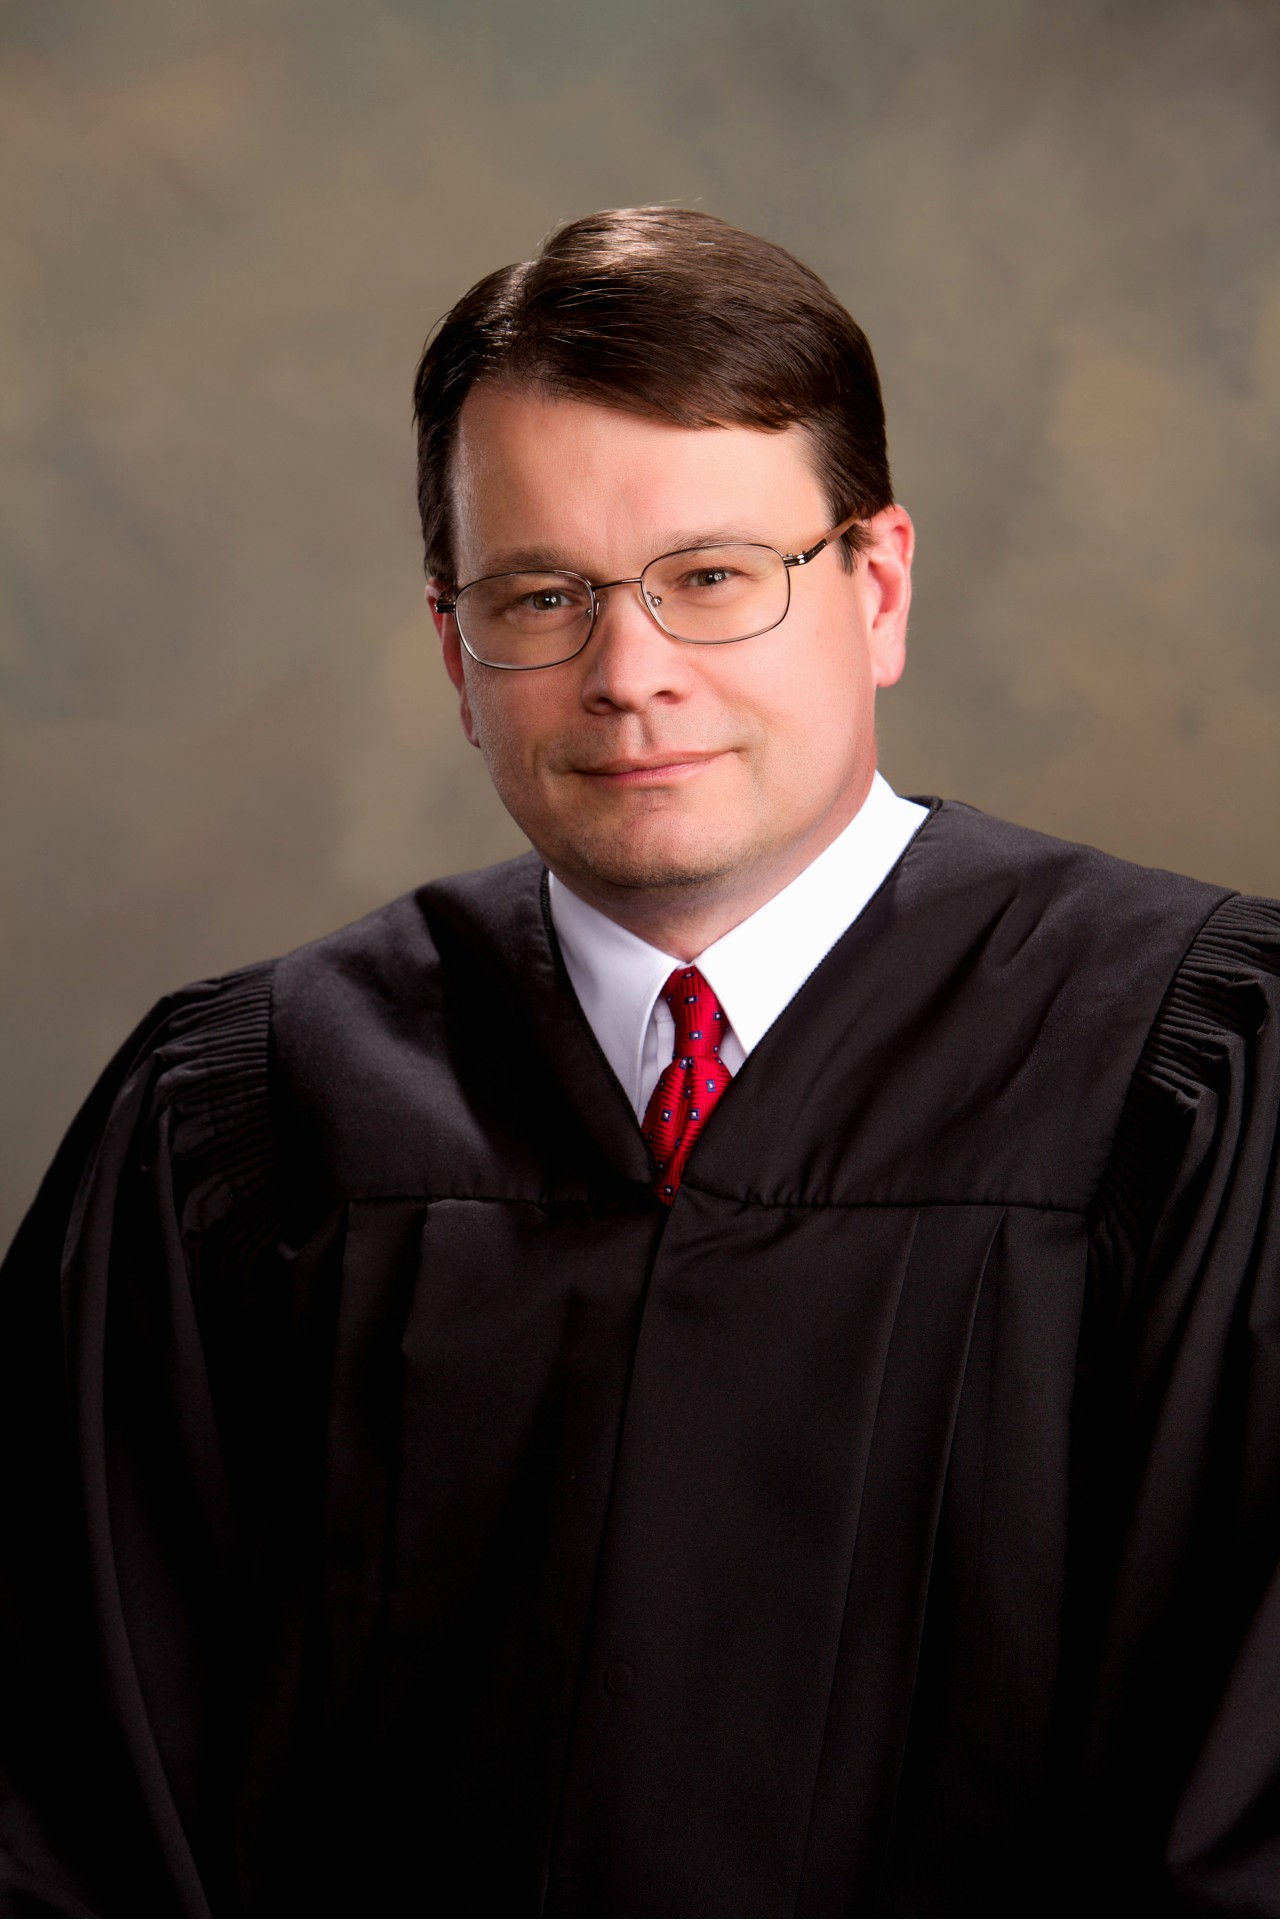 JUDGE ROGER GRIFFIN